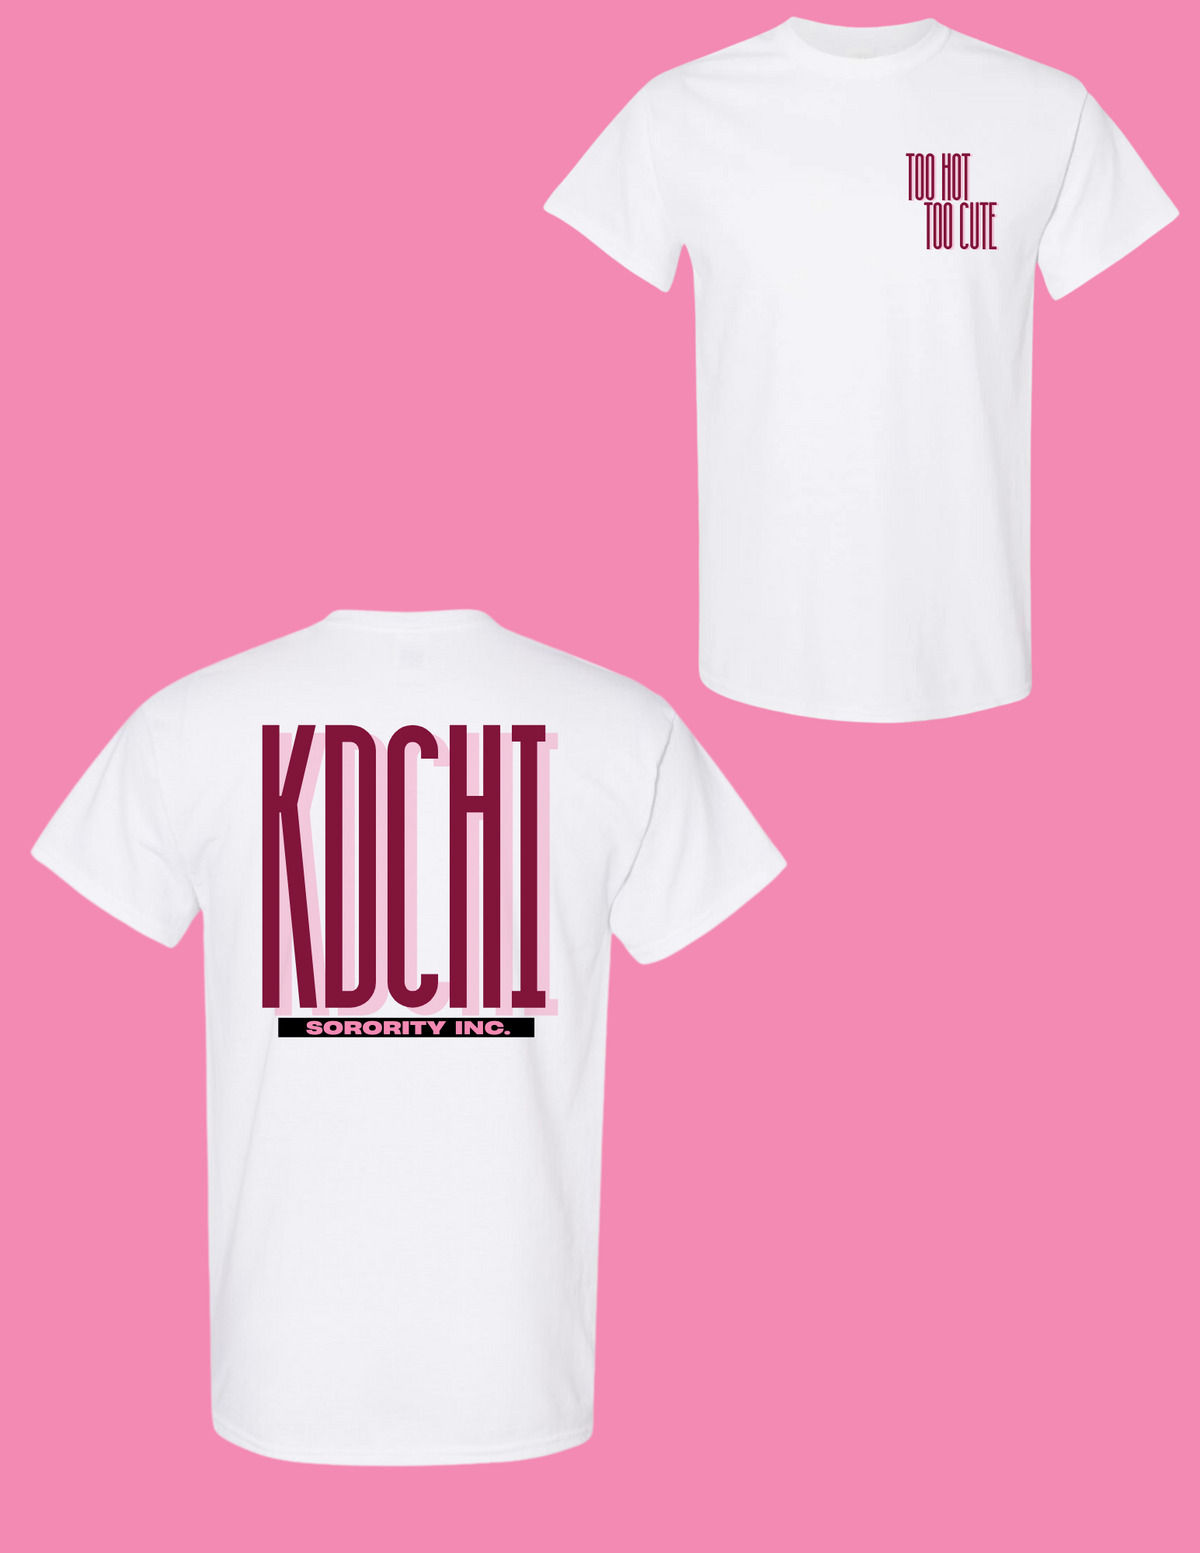 Kdchi Long T-Shirt Front and Back